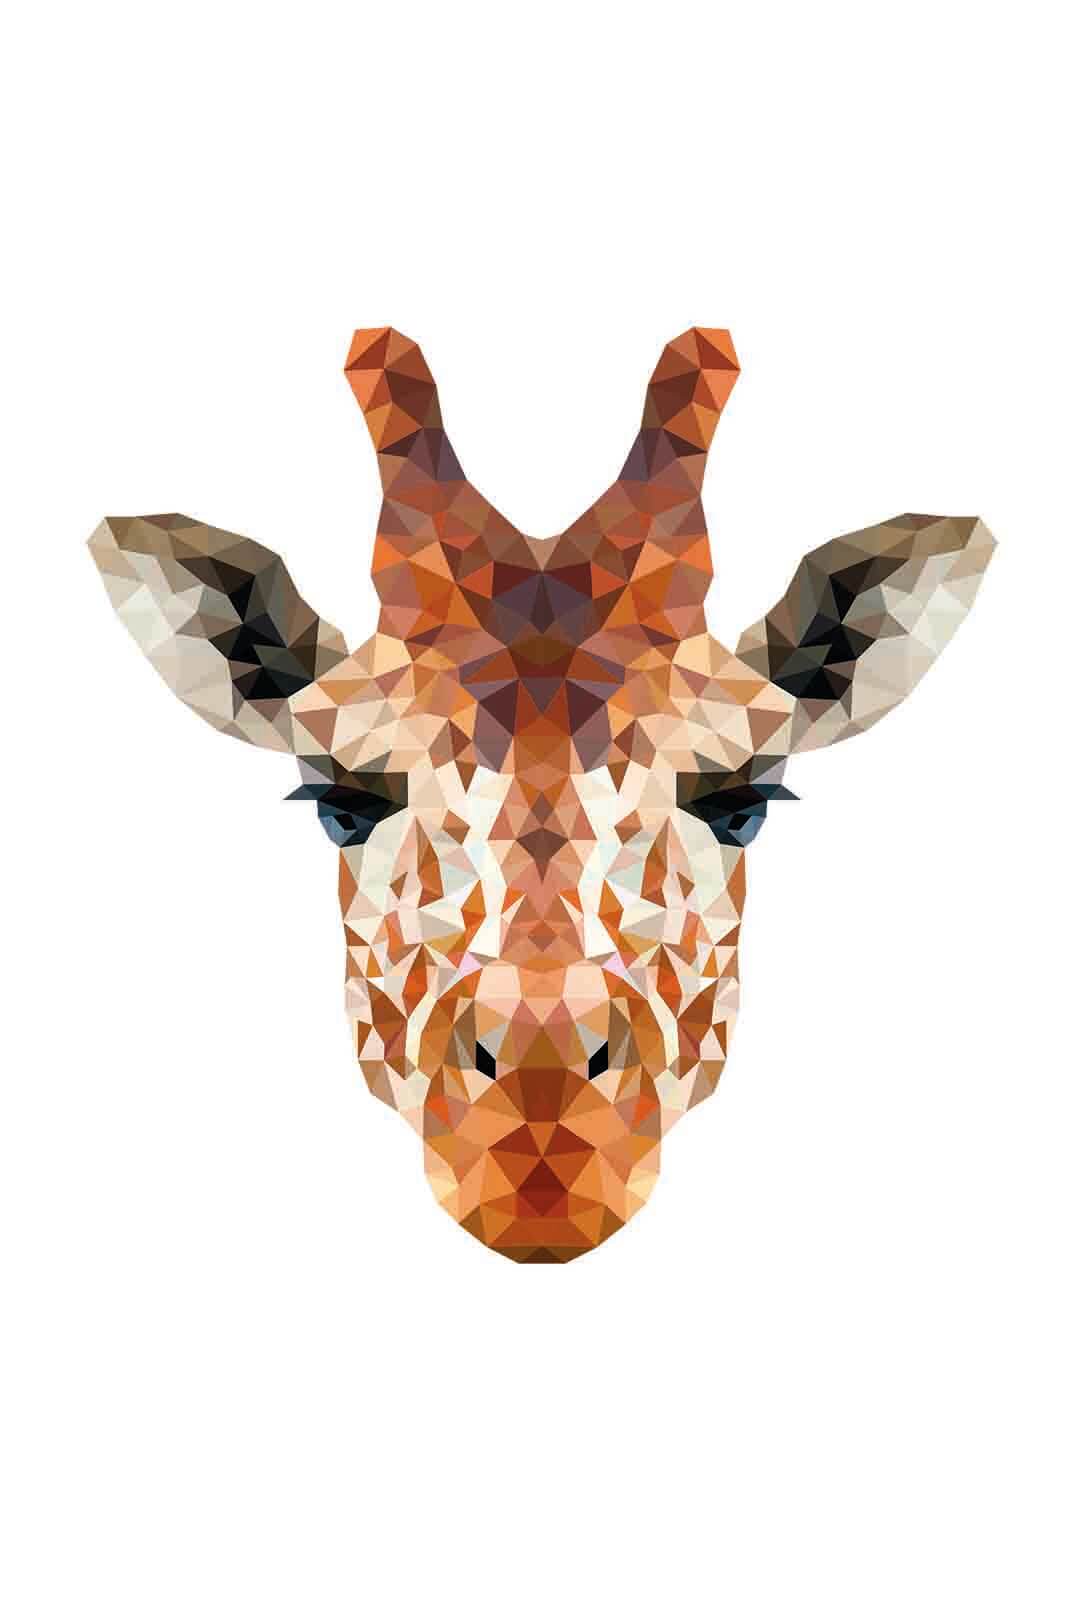 Pixxi Giraffe wanddecoratie kinderkamer